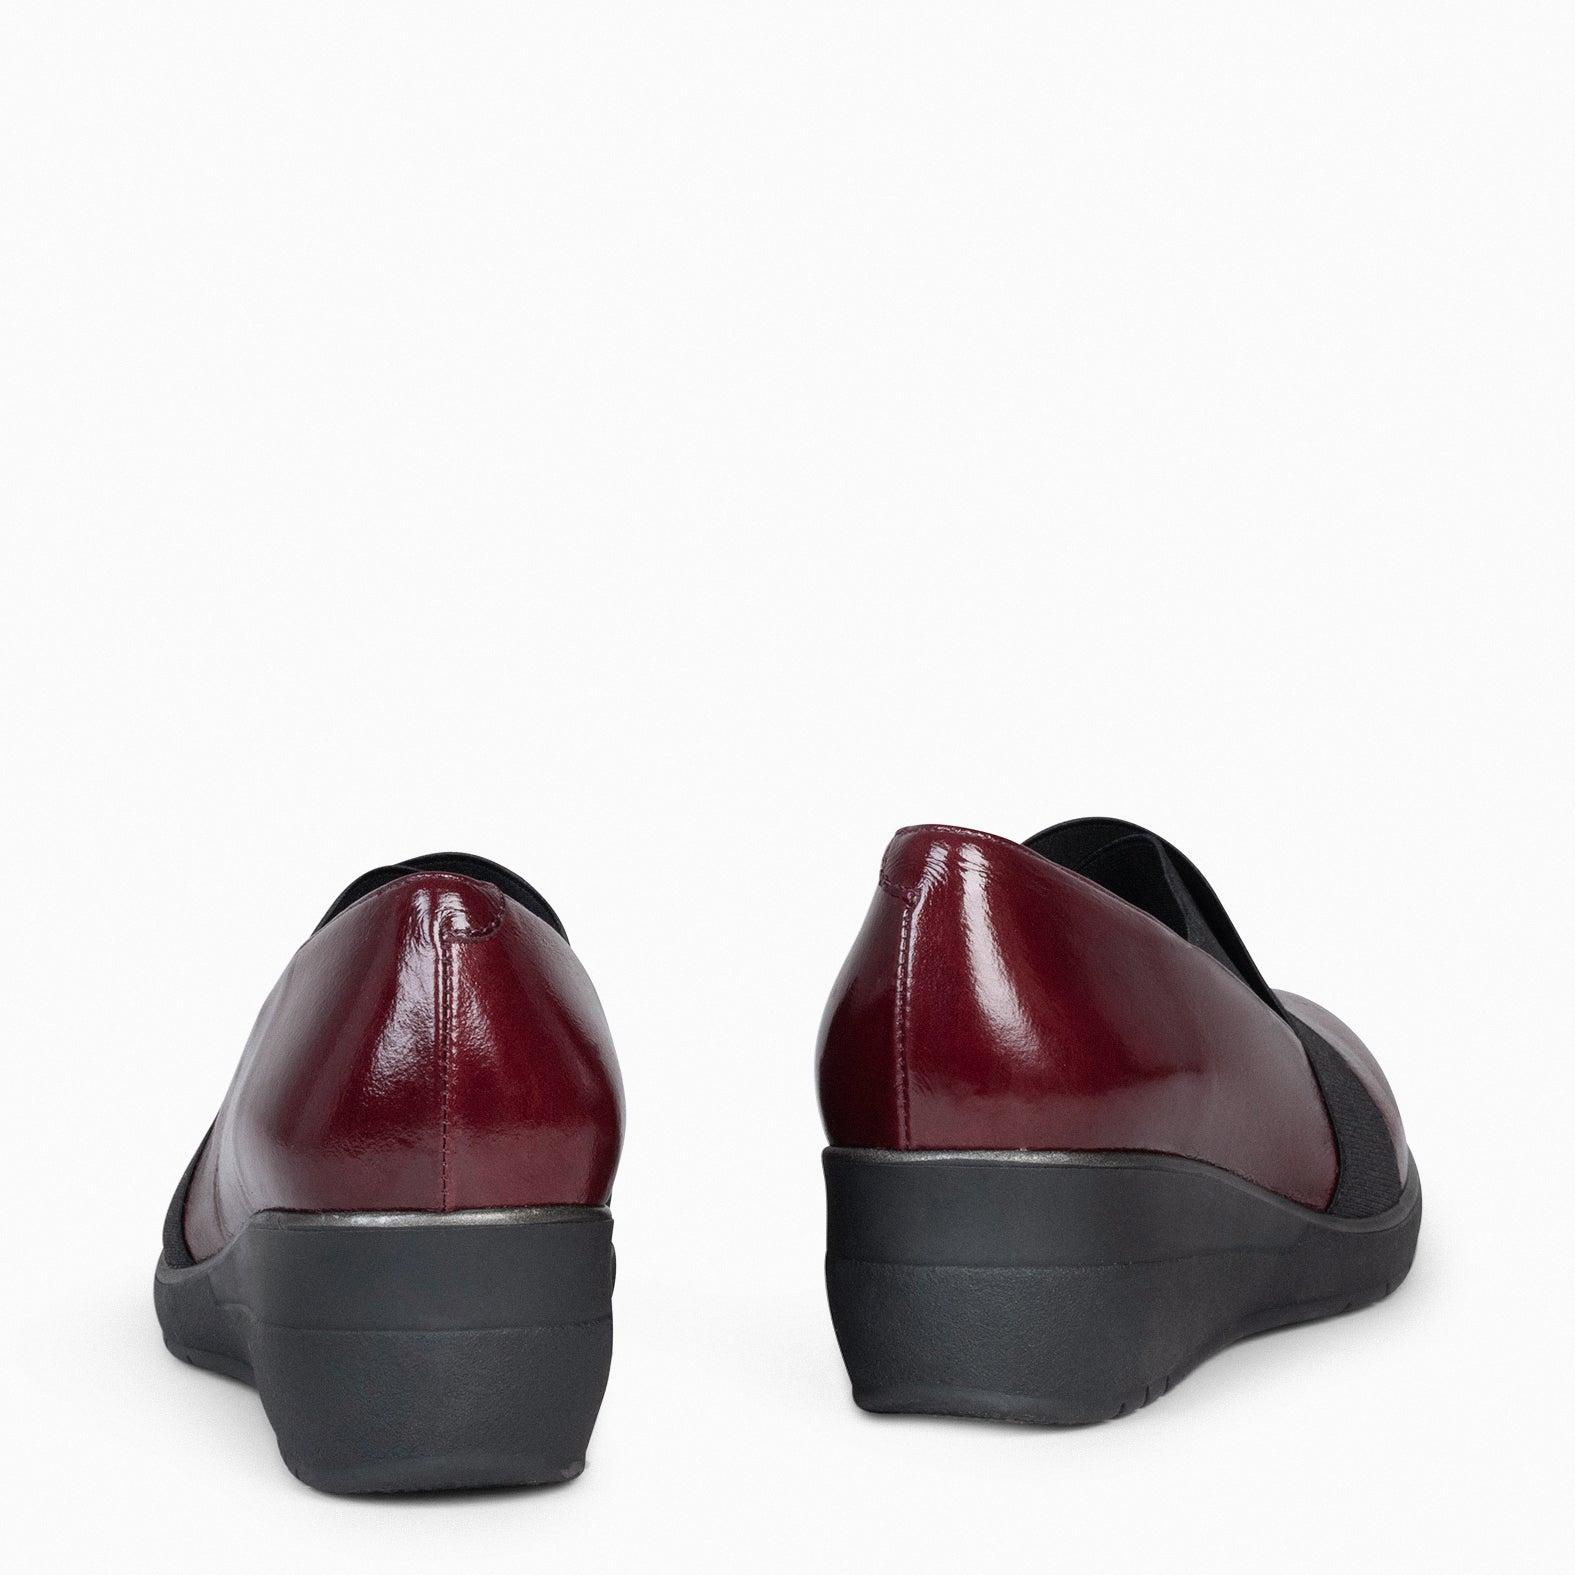 LIA - Zapatos de cuña con tiras elásticas BURDEOS